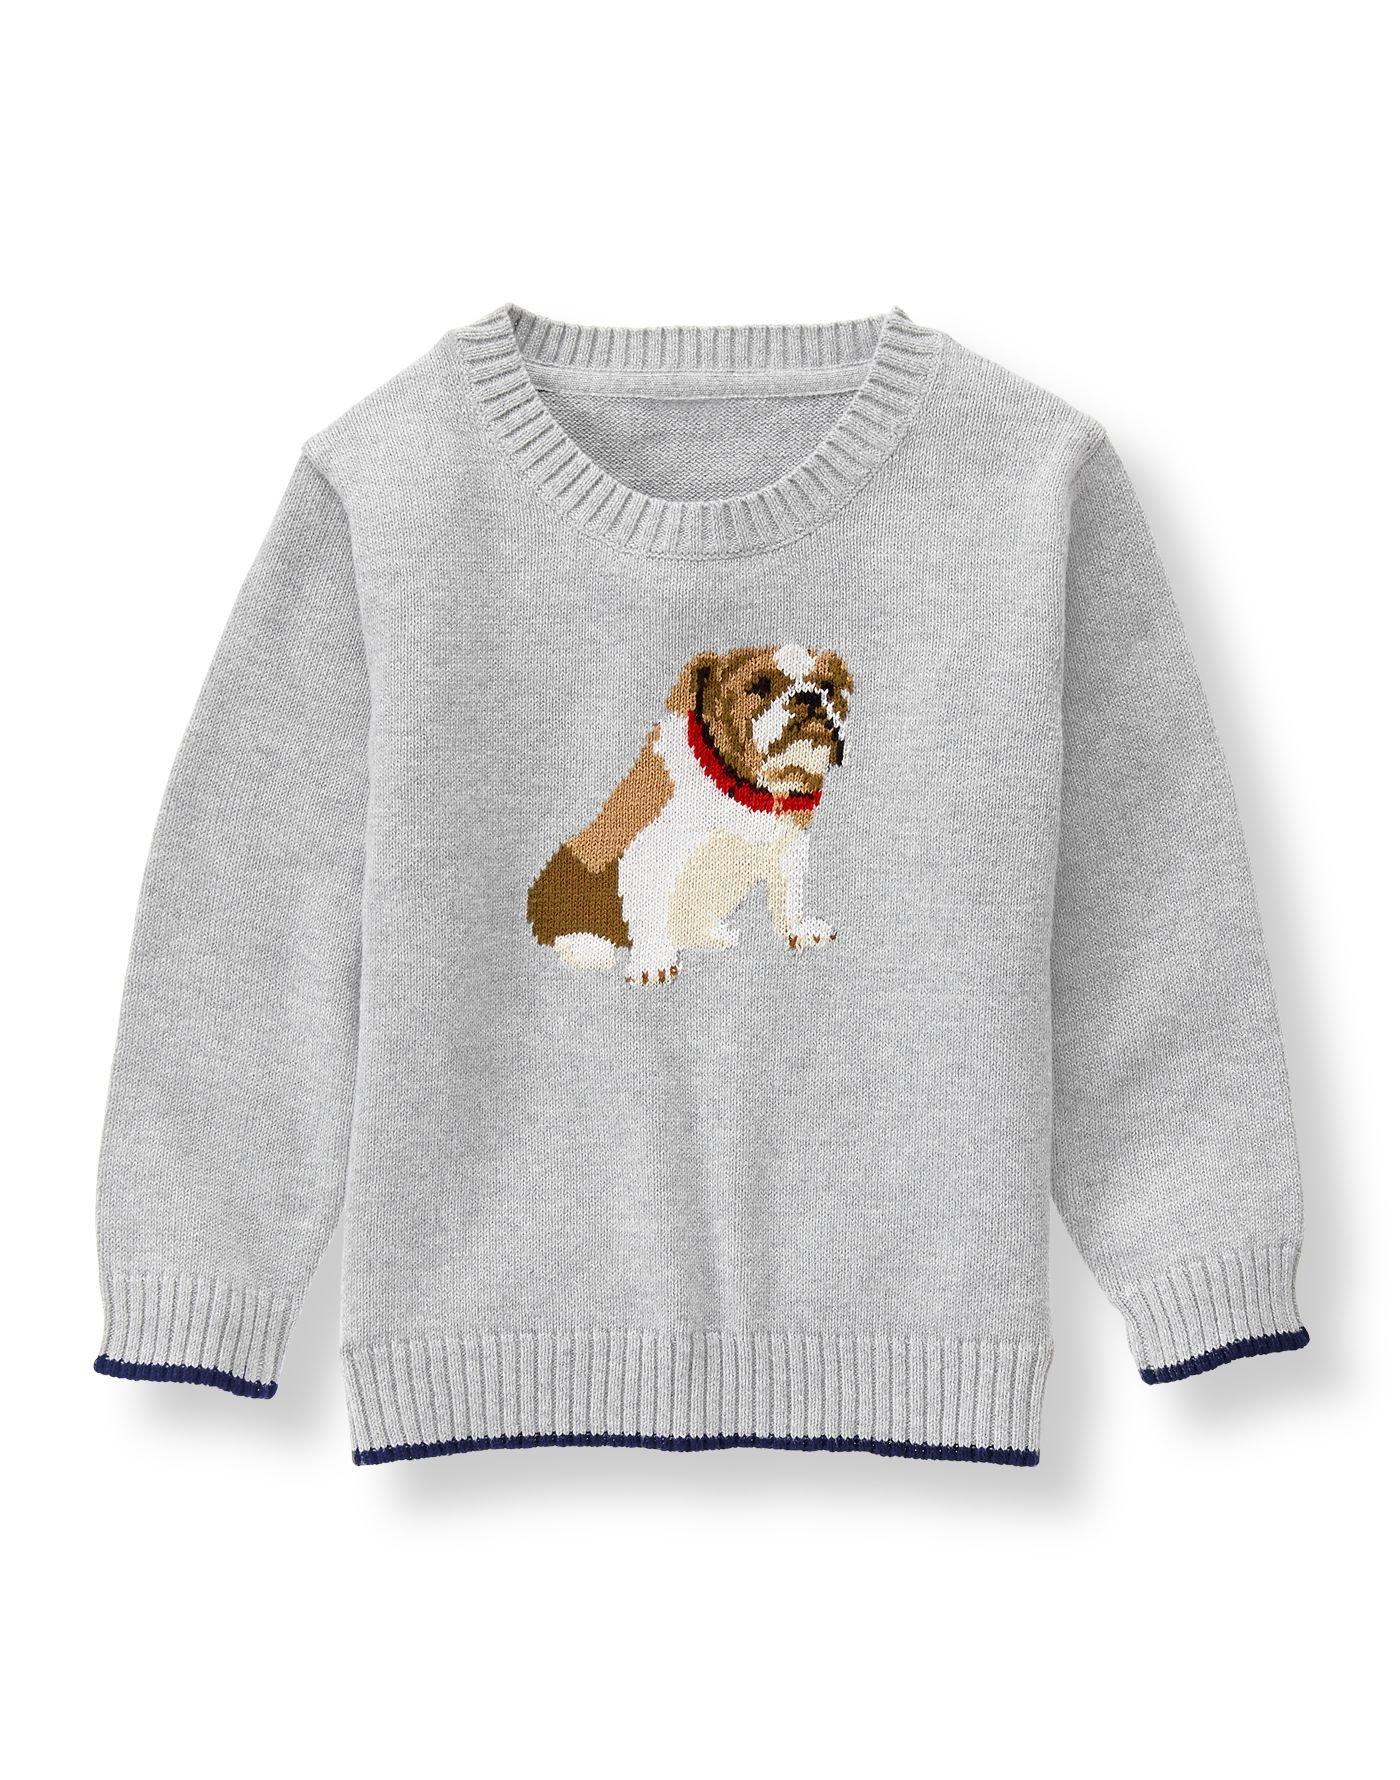 Bulldog Sweater image number 0